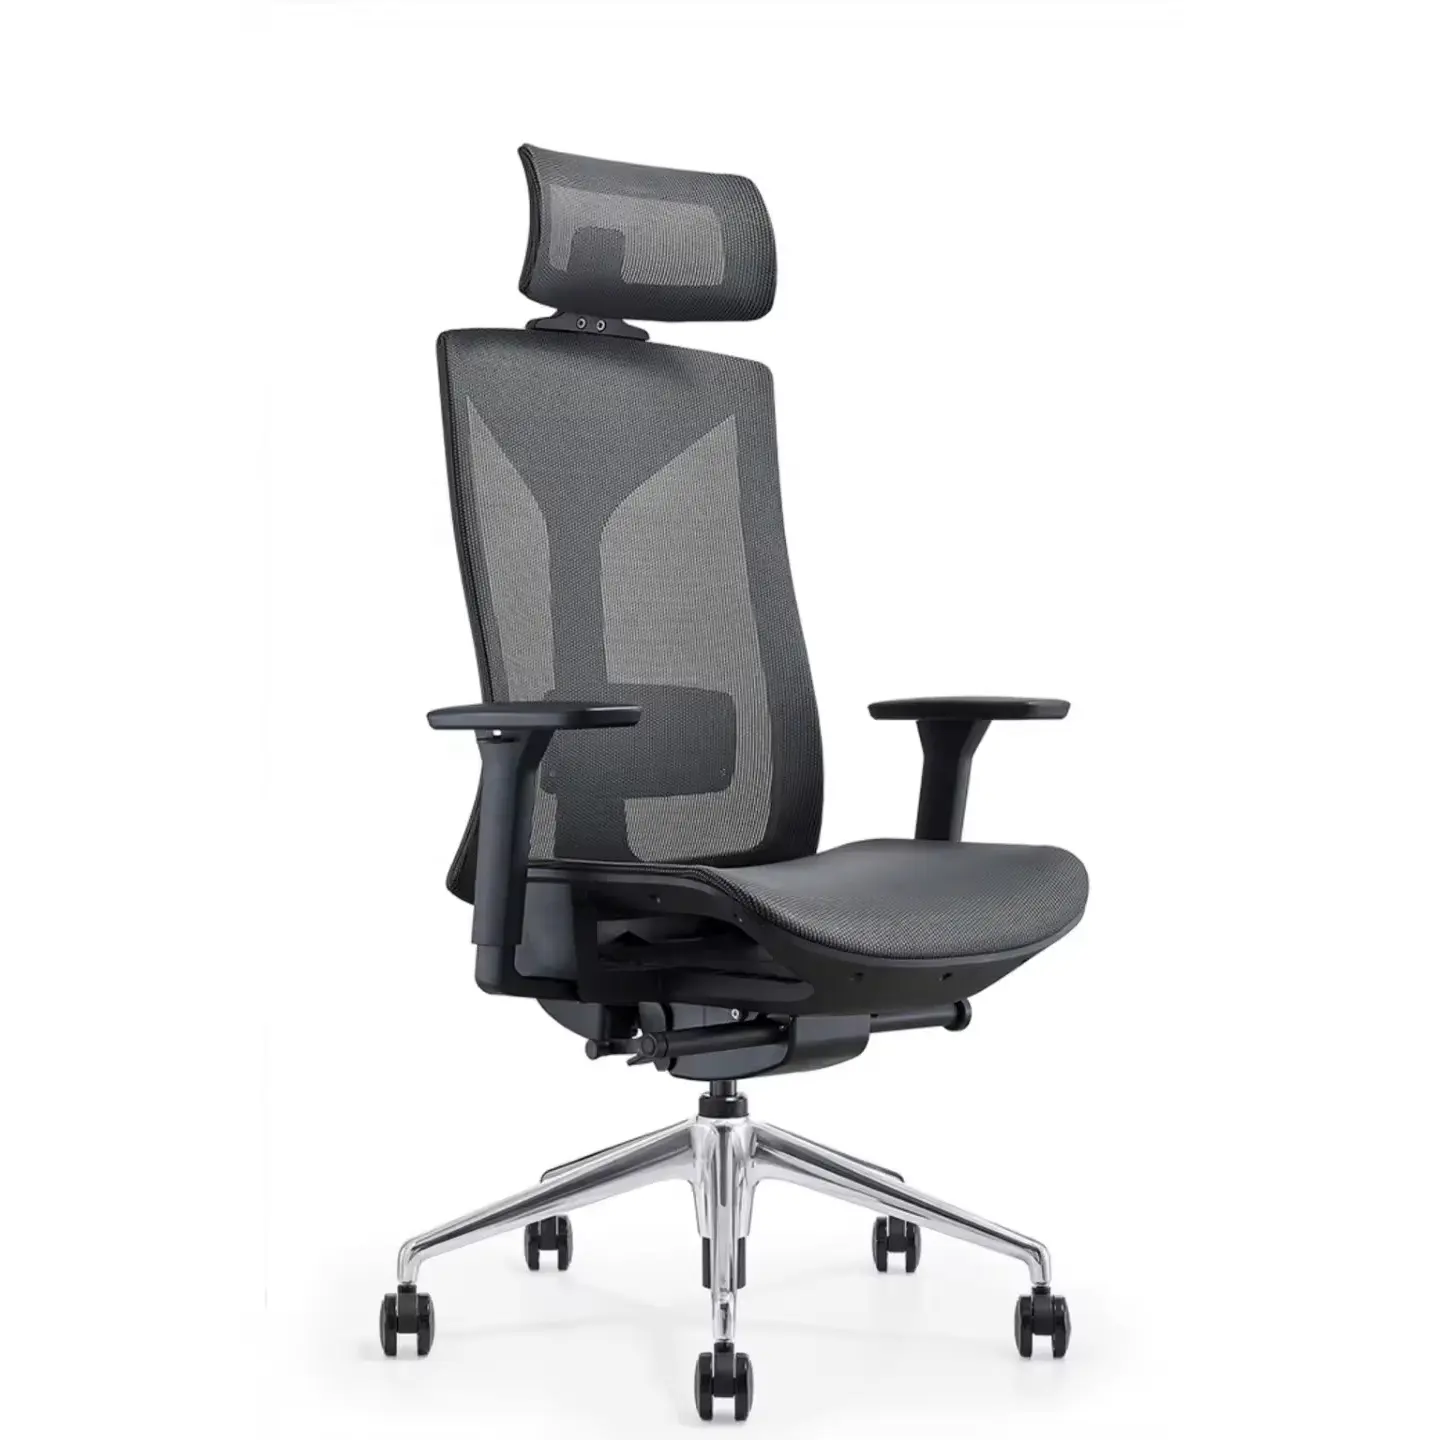 CosyKing-Reposacabezas ajustable con soporte lumbar, sillas de oficina ergonómicas de lujo